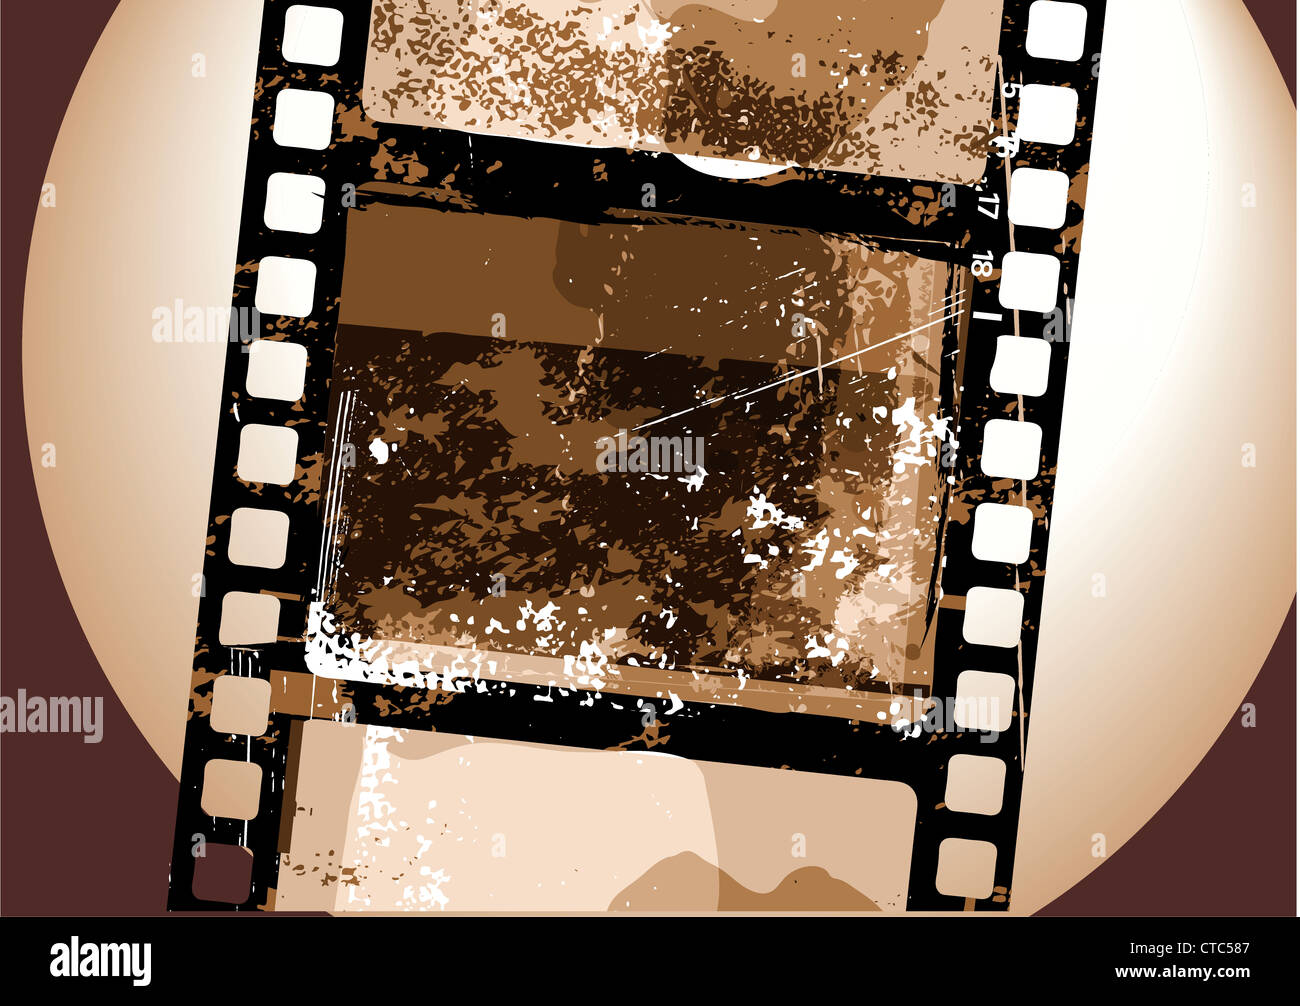 Vector Illustration Of Grunge Film Pattern Stock Photo Alamy